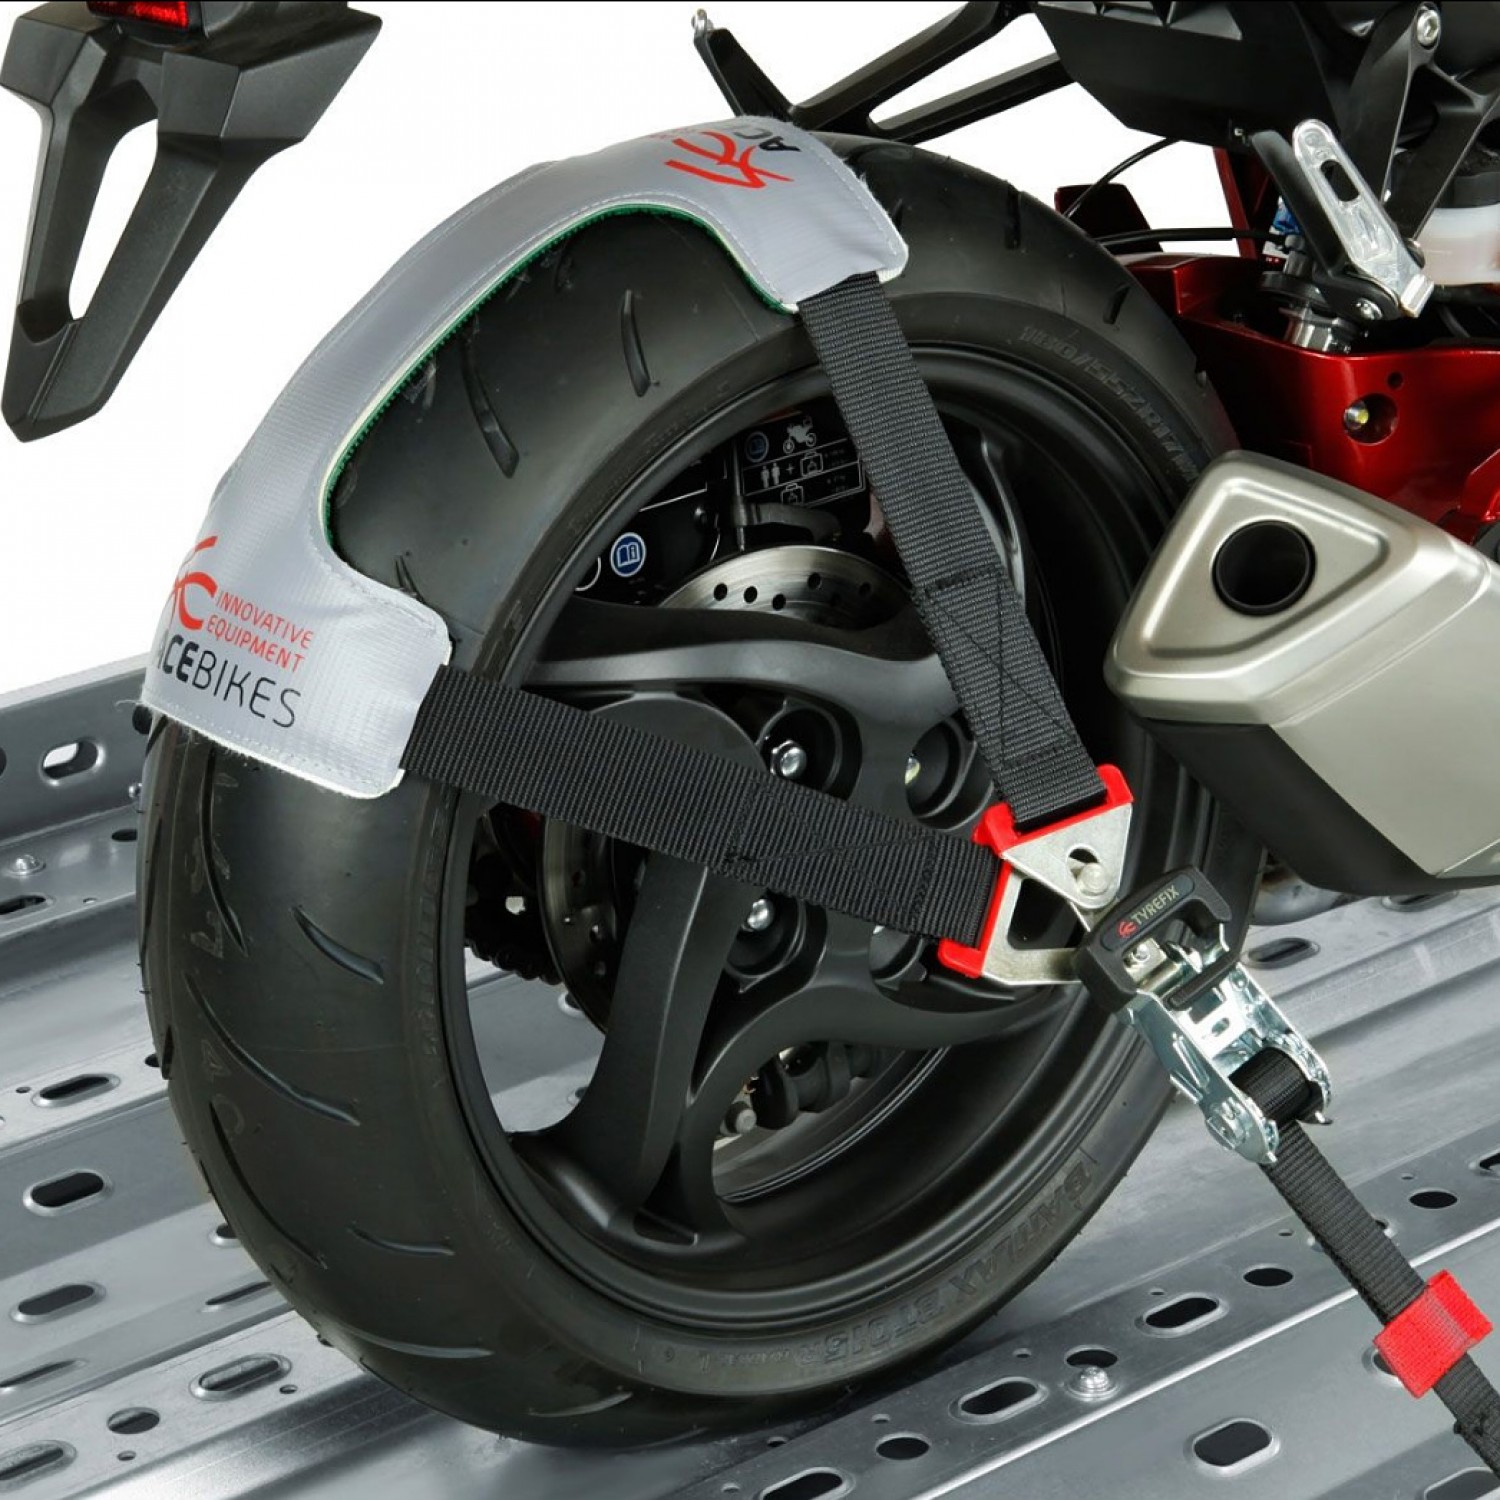 Kit sangles pour roues moto Acebikes Tyre Fix